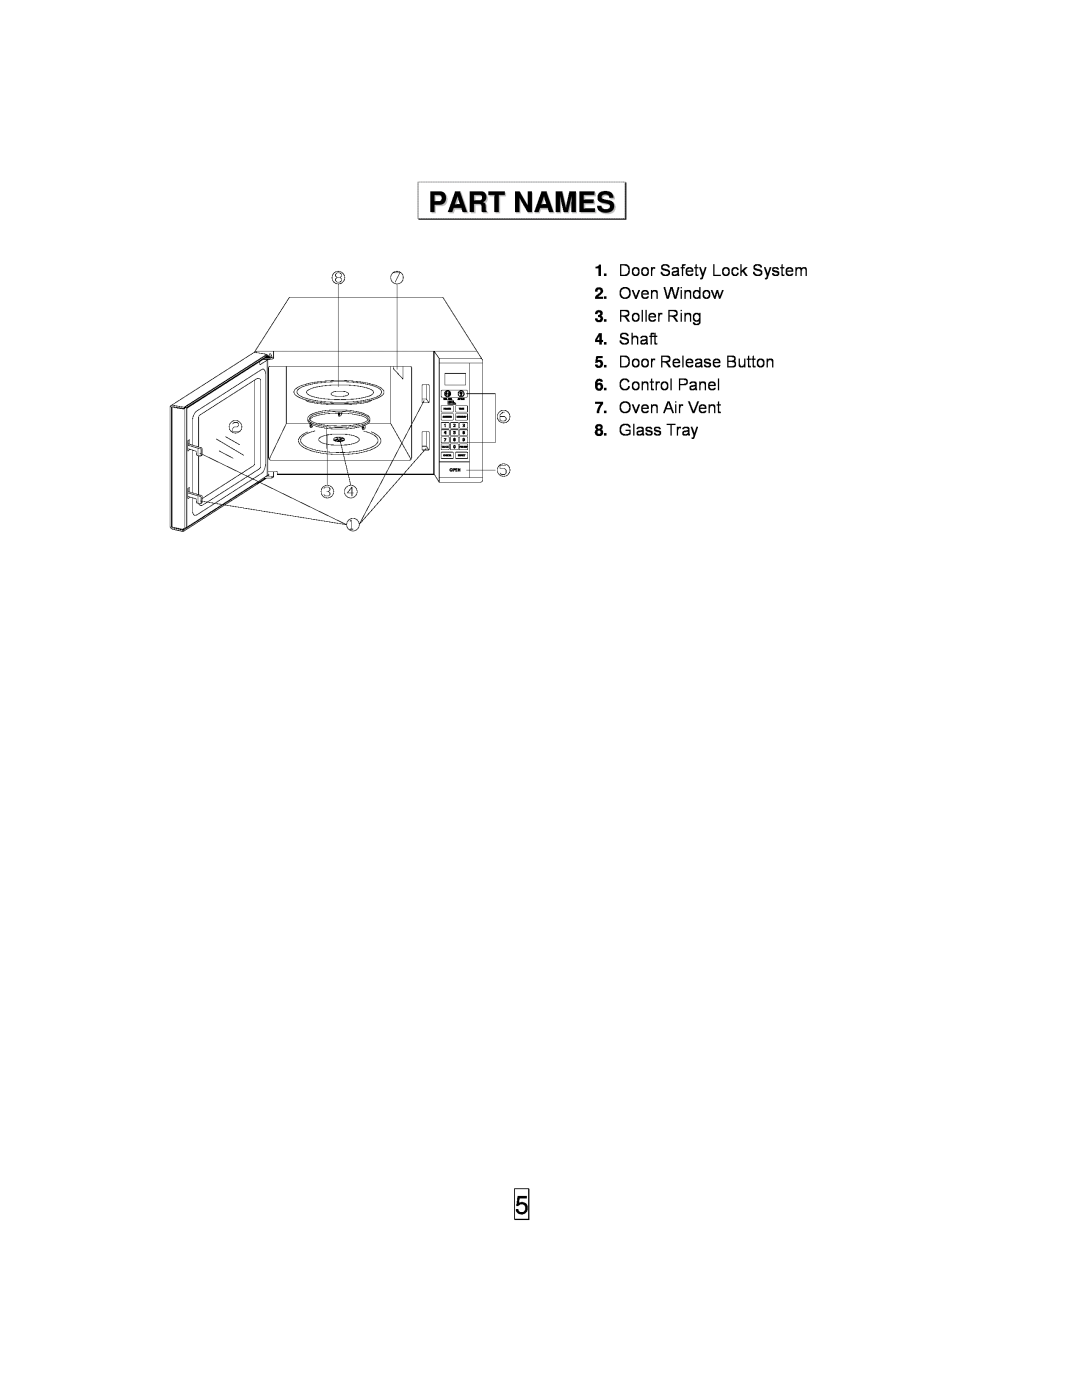 Sanyo EM-S8597V owner manual Part Names, Door Safety Lock System 2. Oven Window 3. Roller Ring 4. Shaft, Glass Tray 